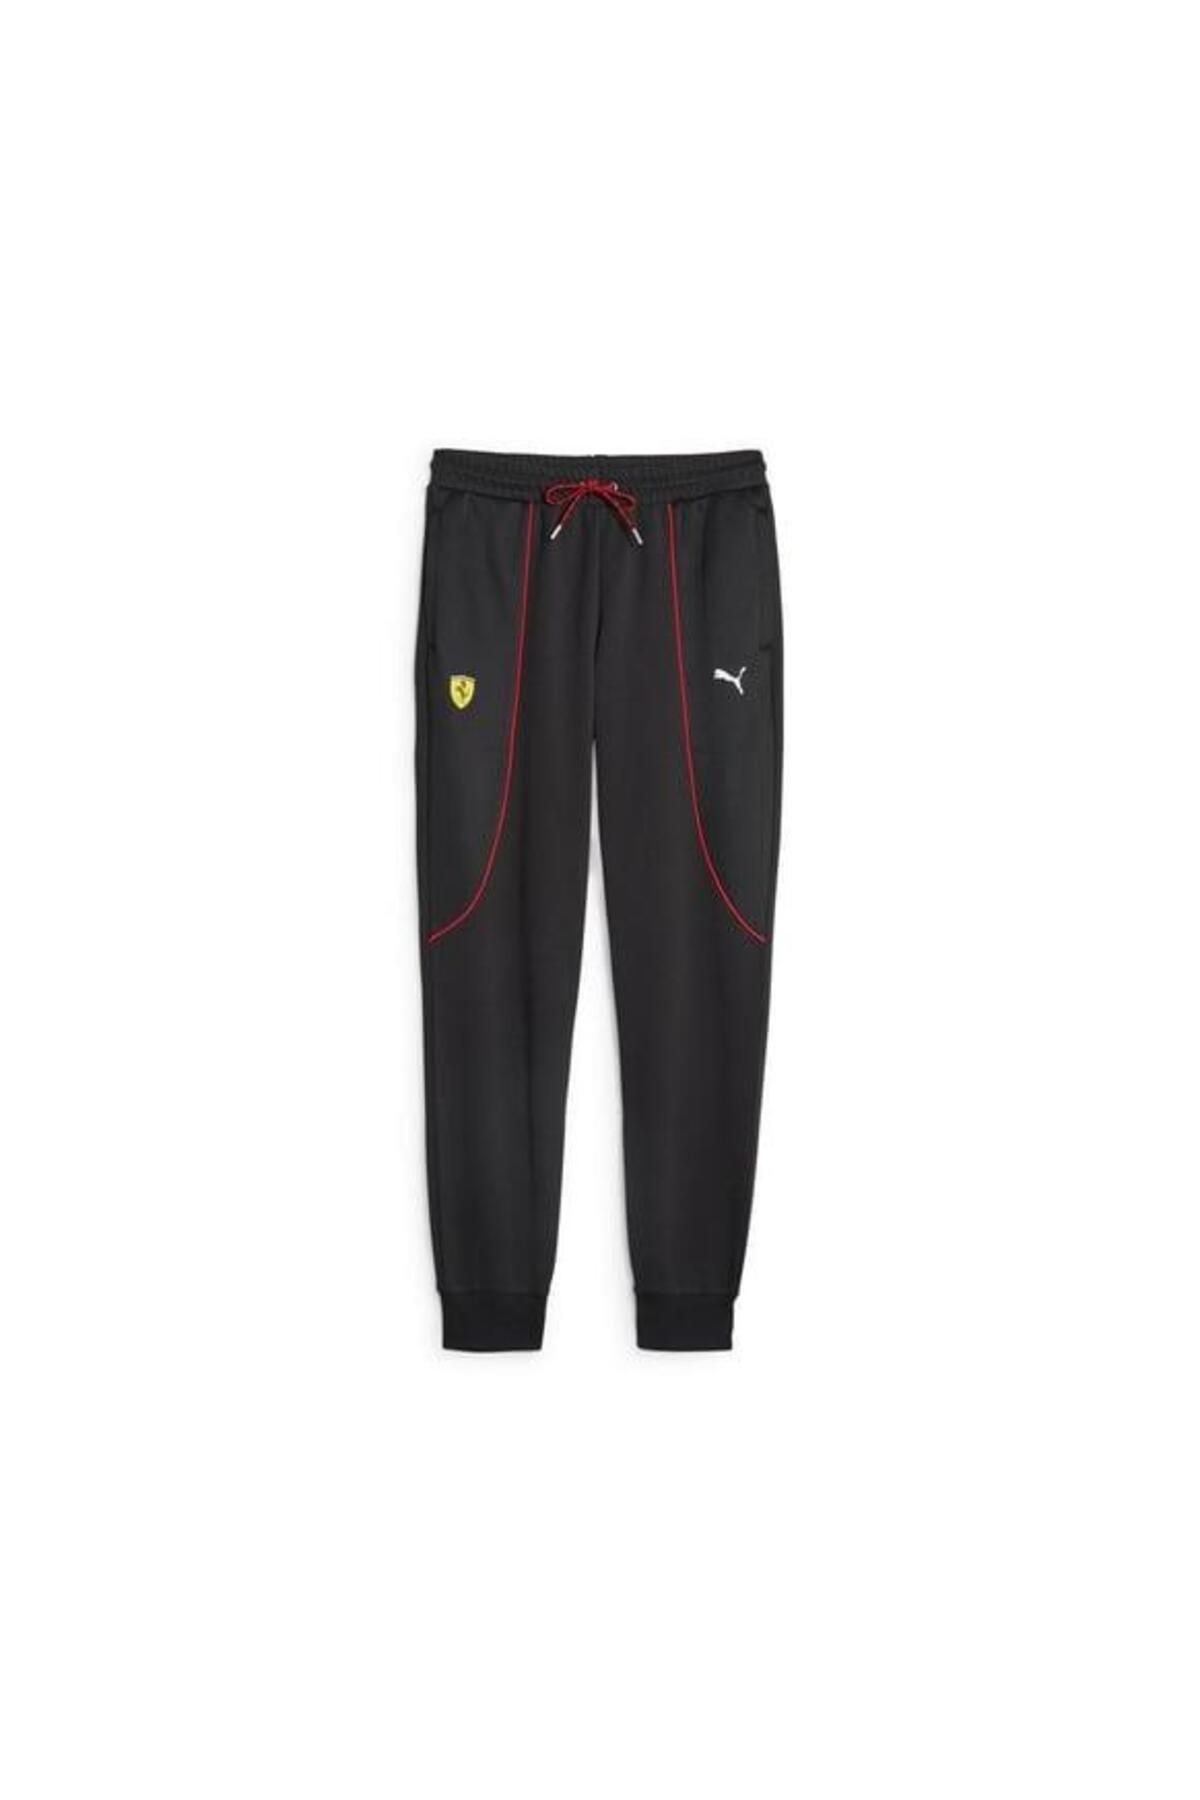 Puma Ferrari Race Sweat Pants CC PUMA Black